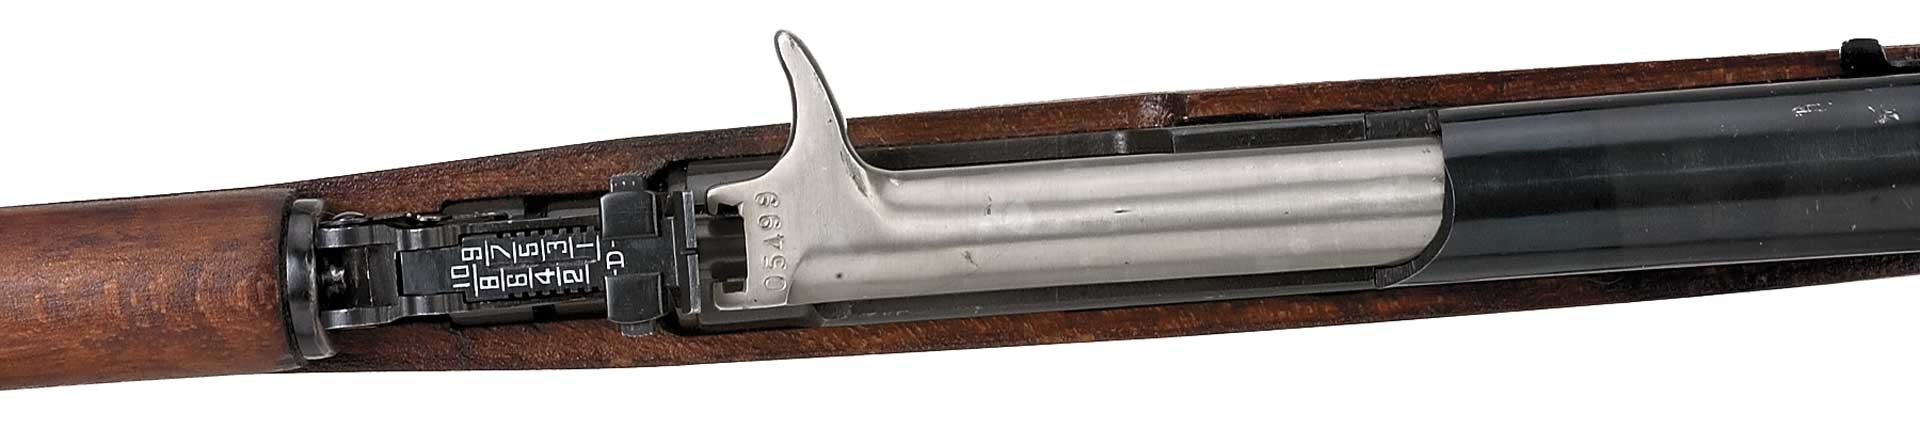 rifle top silver bolt brown wood black metal gun parts